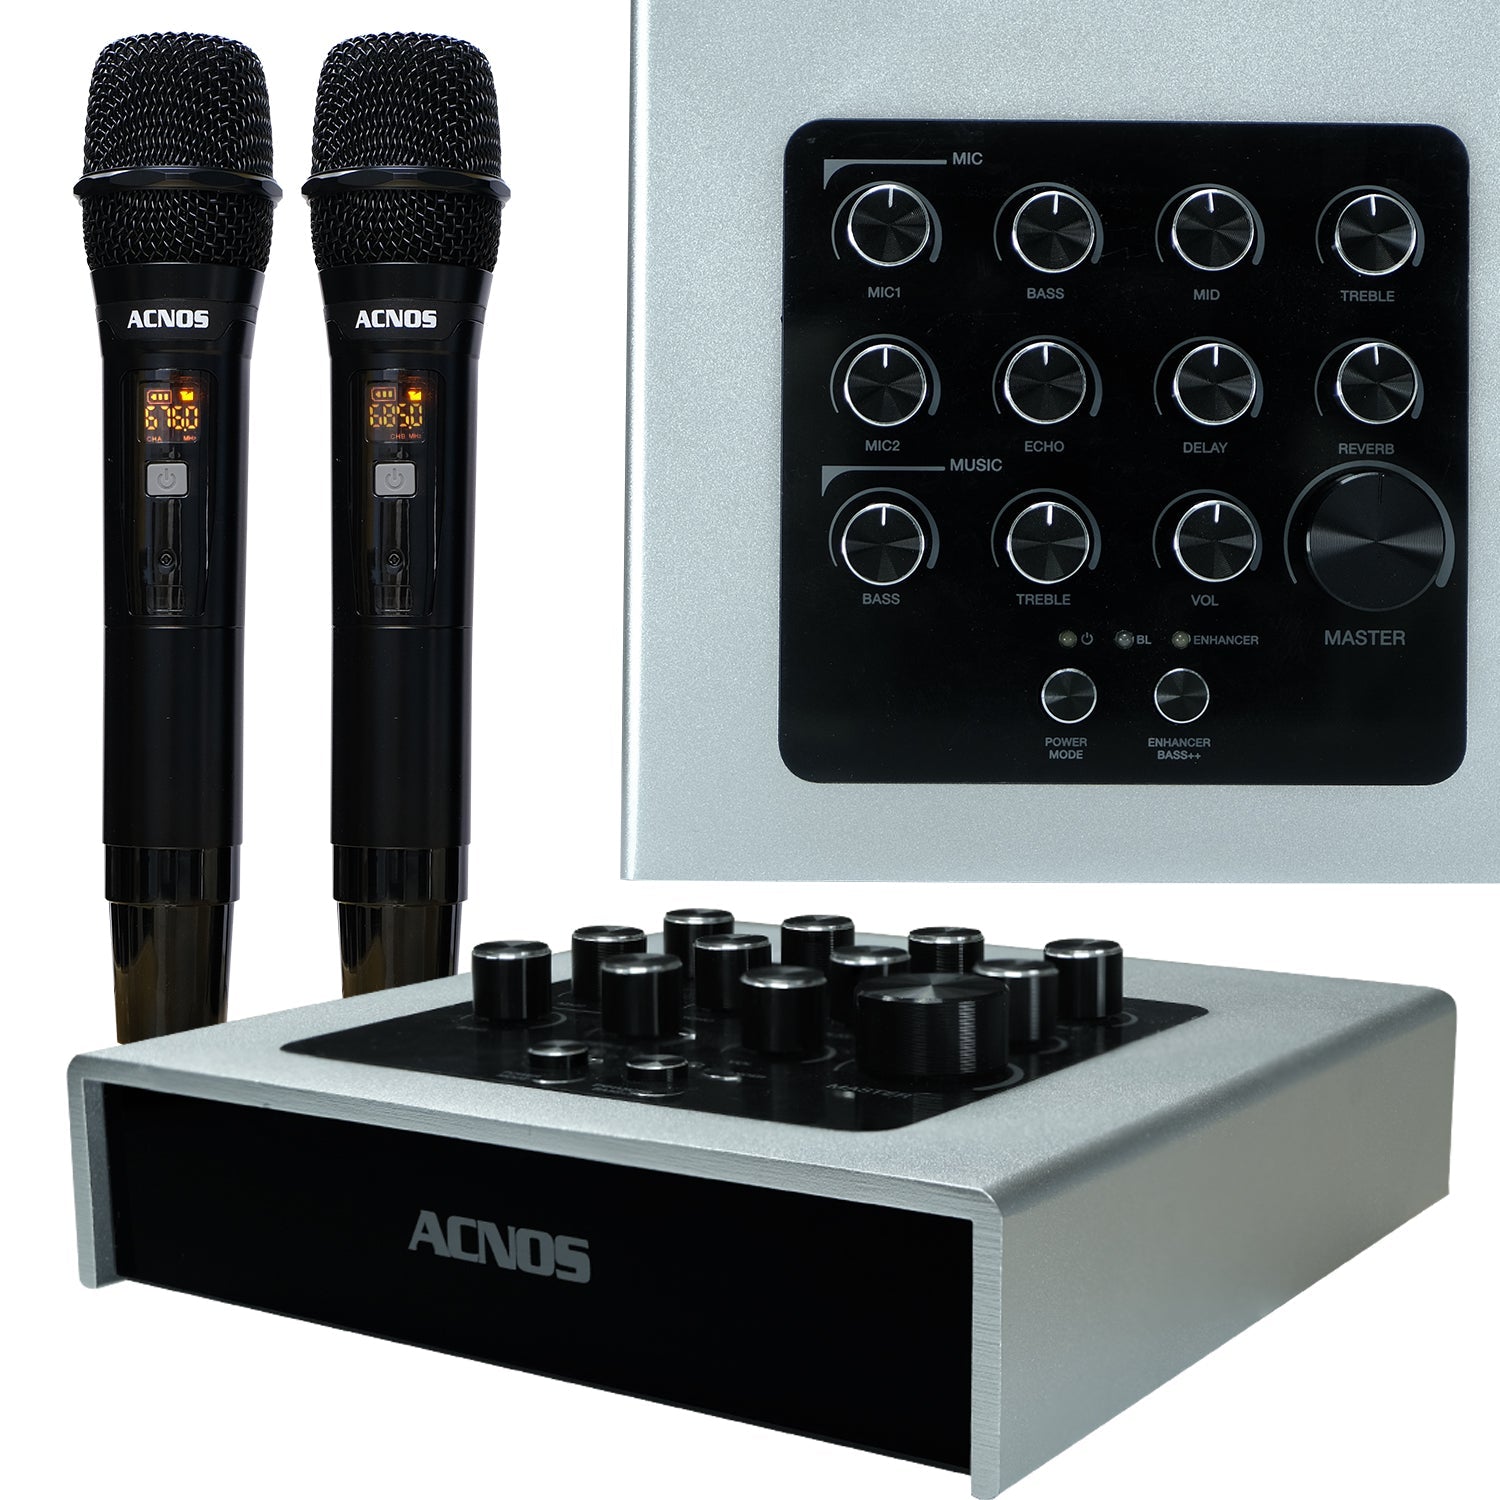 ACNOS Mi - 30u (Silver) Compact Portable Karaoke Enhancer Mixer + 2 UHF Wireless Microphones + Carry Bag - Karaoke Home Entertainment